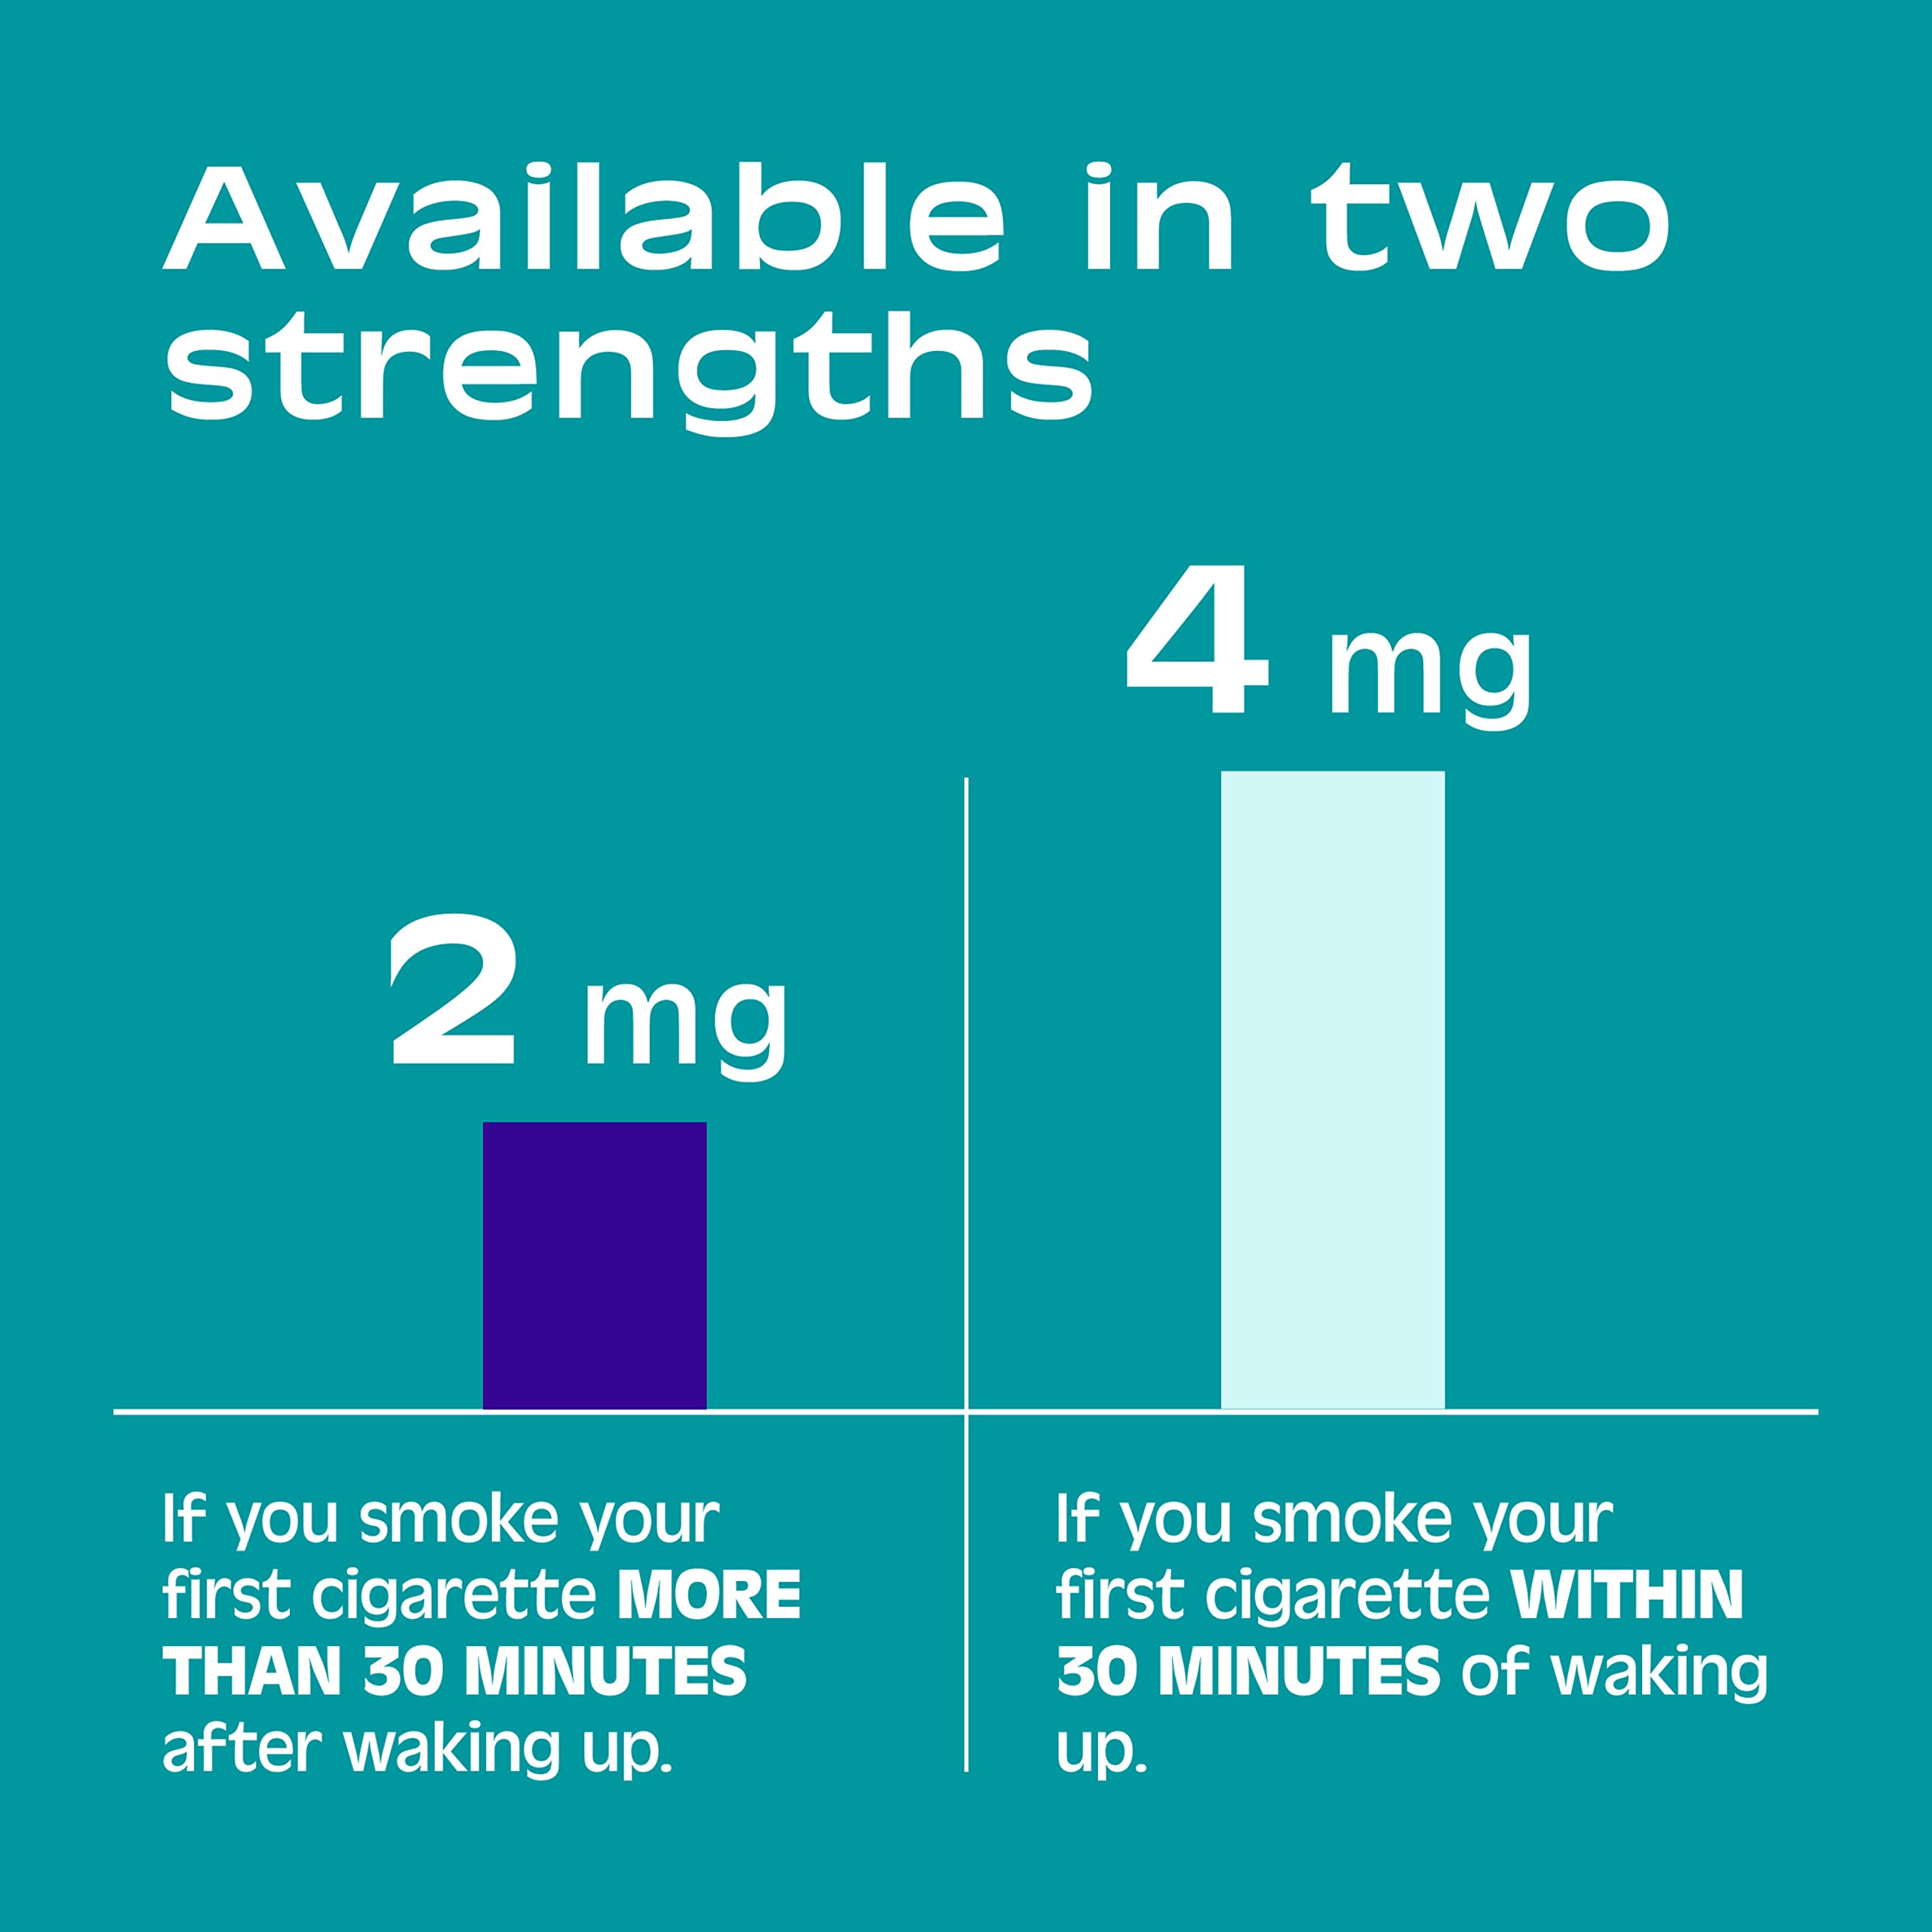 Nicorette 2 mg Mini Nicotine Lozenges to Help Quit Smoking - Mint Flavor Stop Smoking Aid, 20 Count